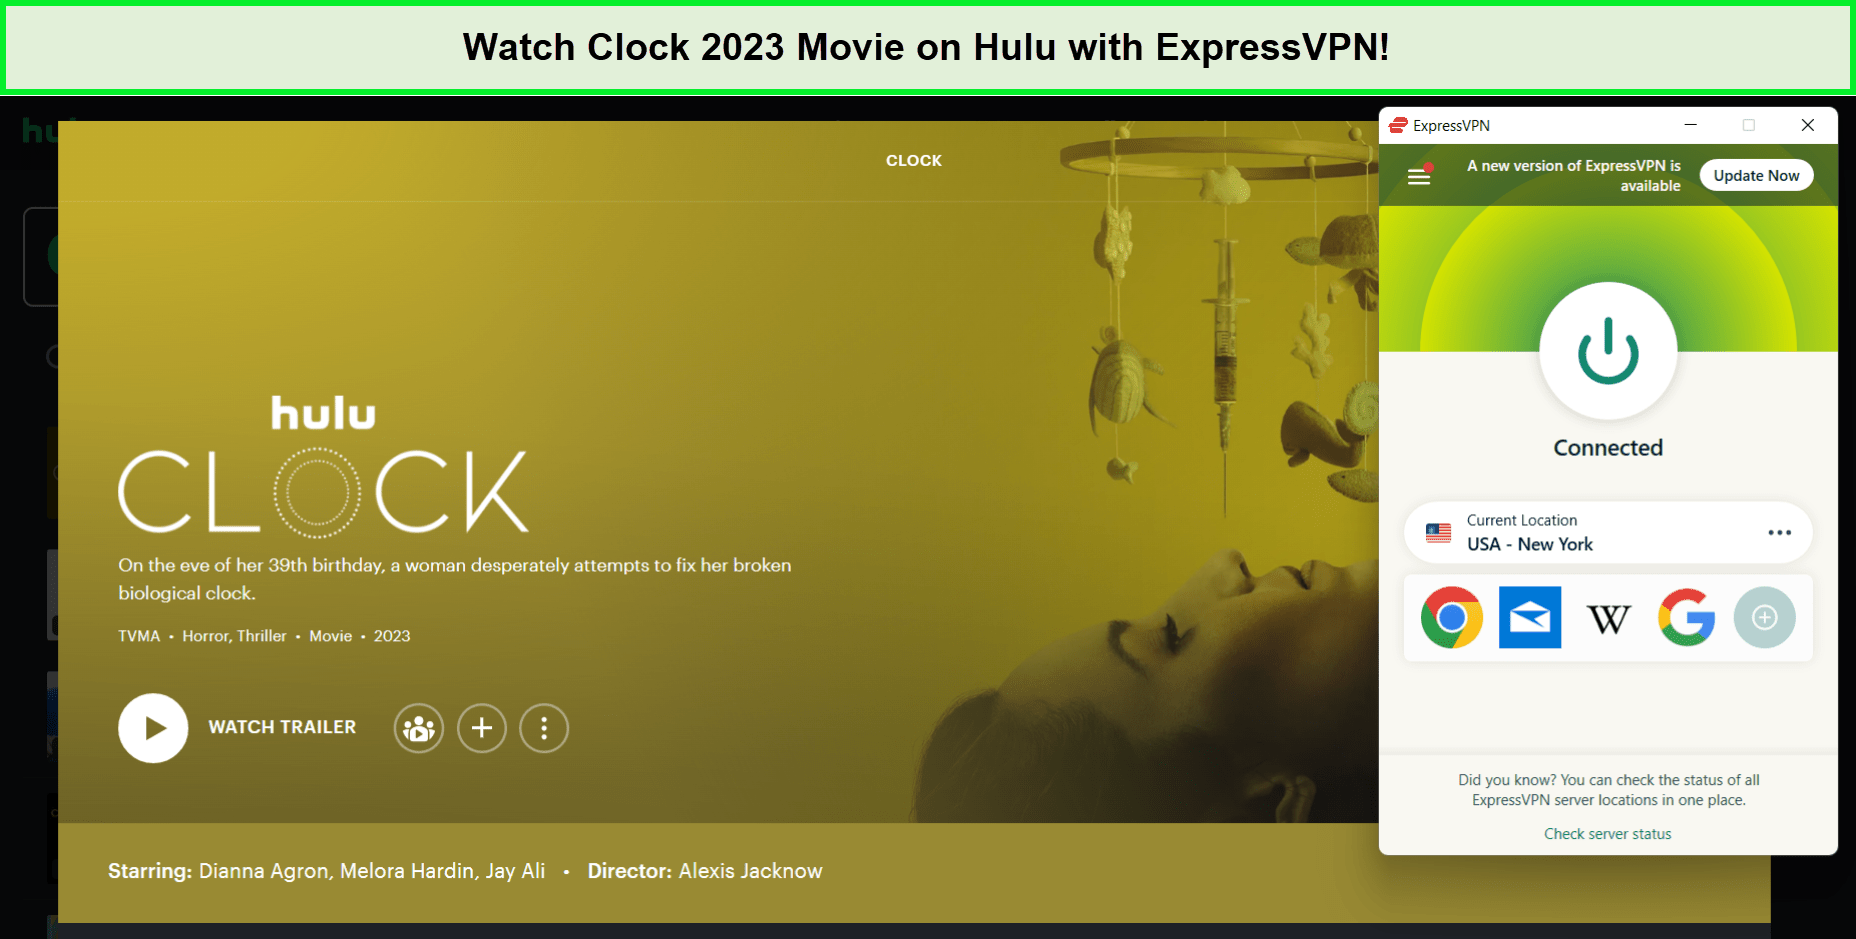 With-ExpressVPN-Watch-Clock-2023-Movie-on-Hulu-in-Germany